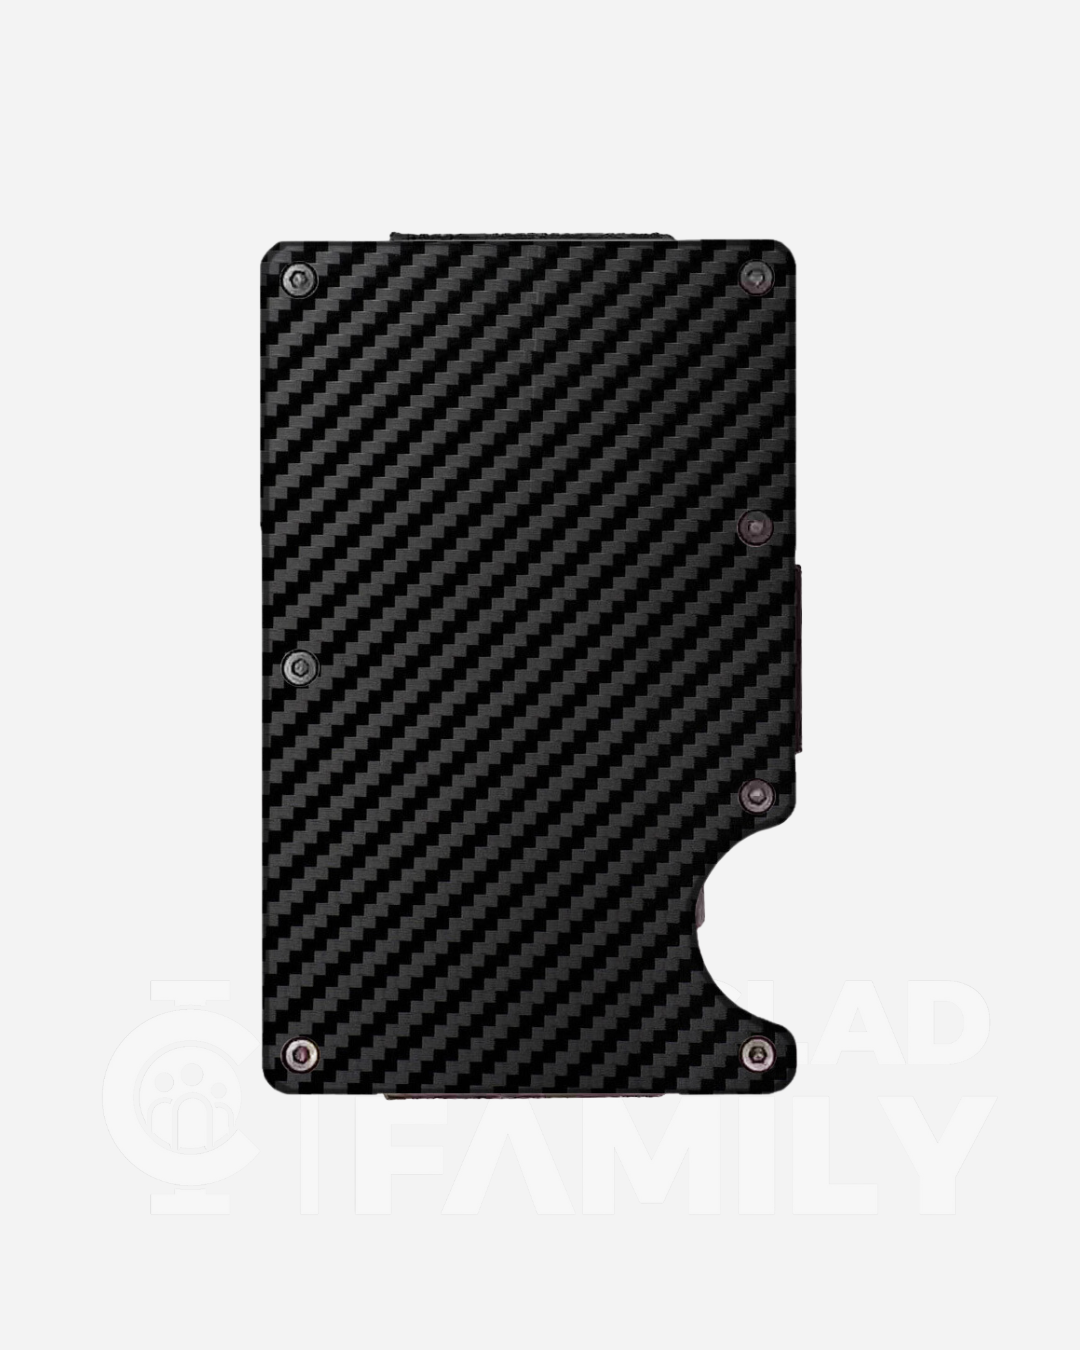 A black carbon fiber wallet featuring RFID blocking technology